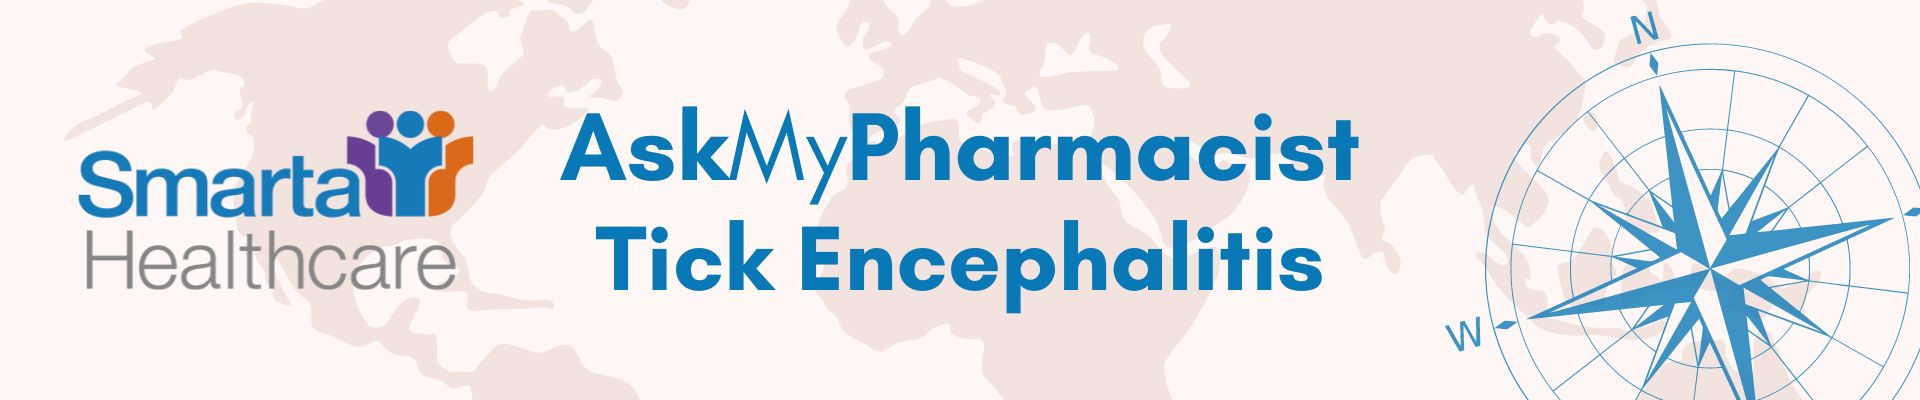 Smarta Healthcare AskMyPharmacist FAQs Tick-borne Encephalitis